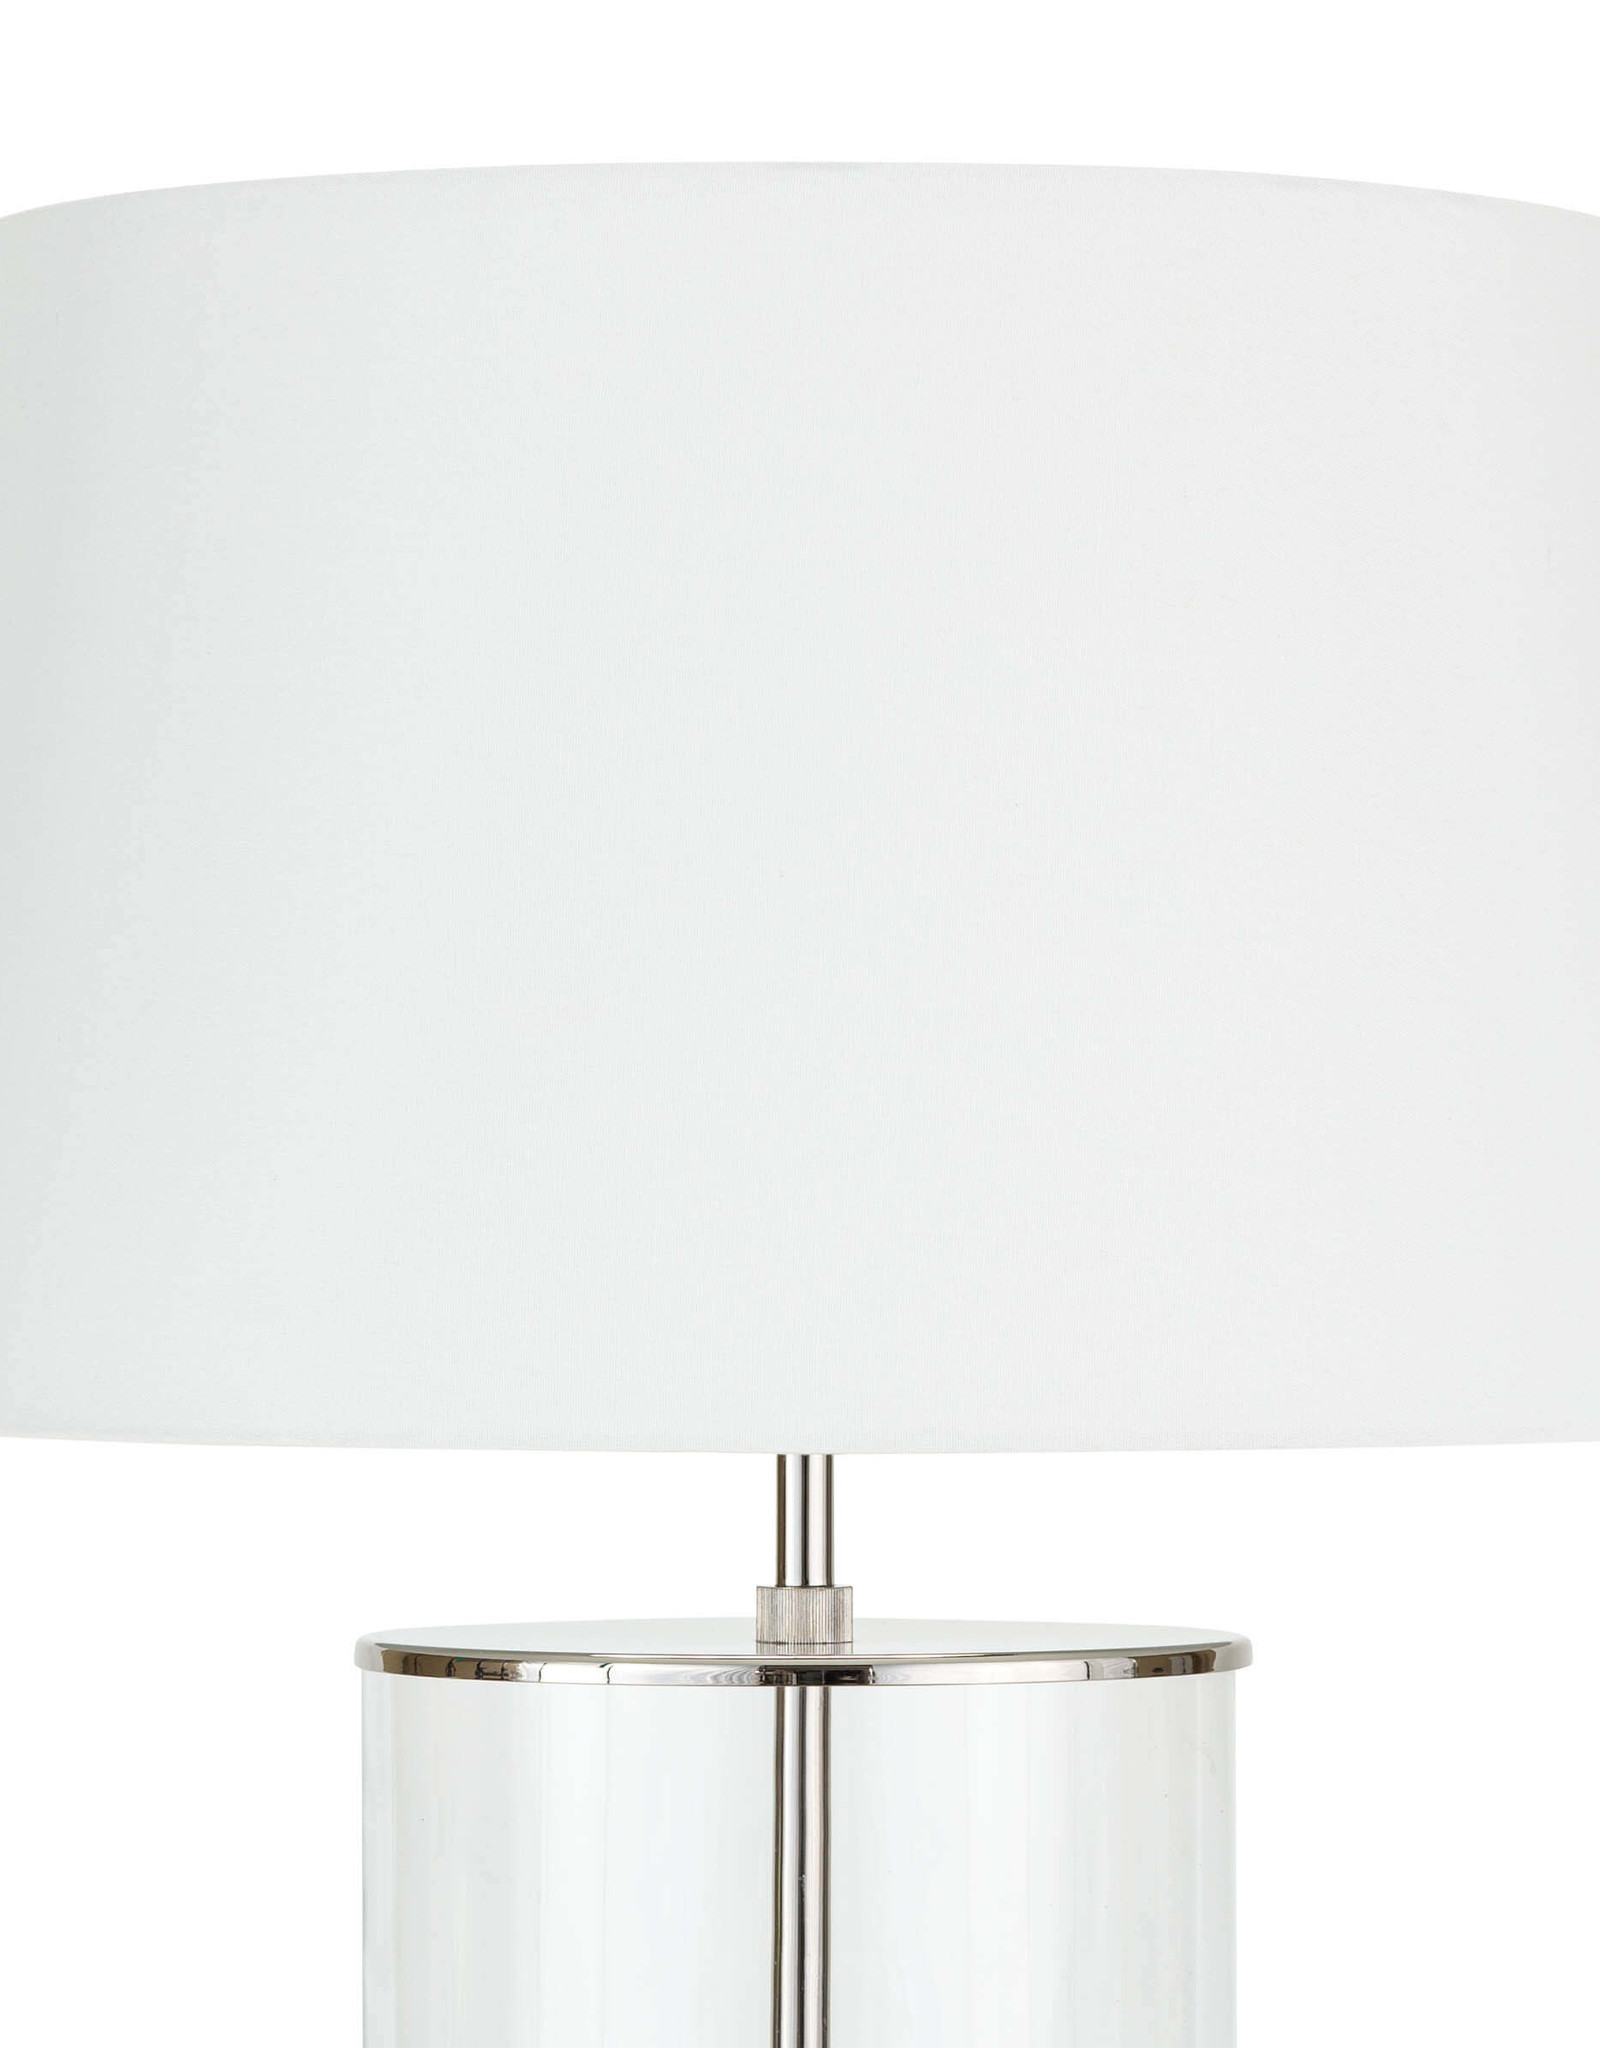 Coastal Living Magelian Glass Table Lamp (Polished Nickel)